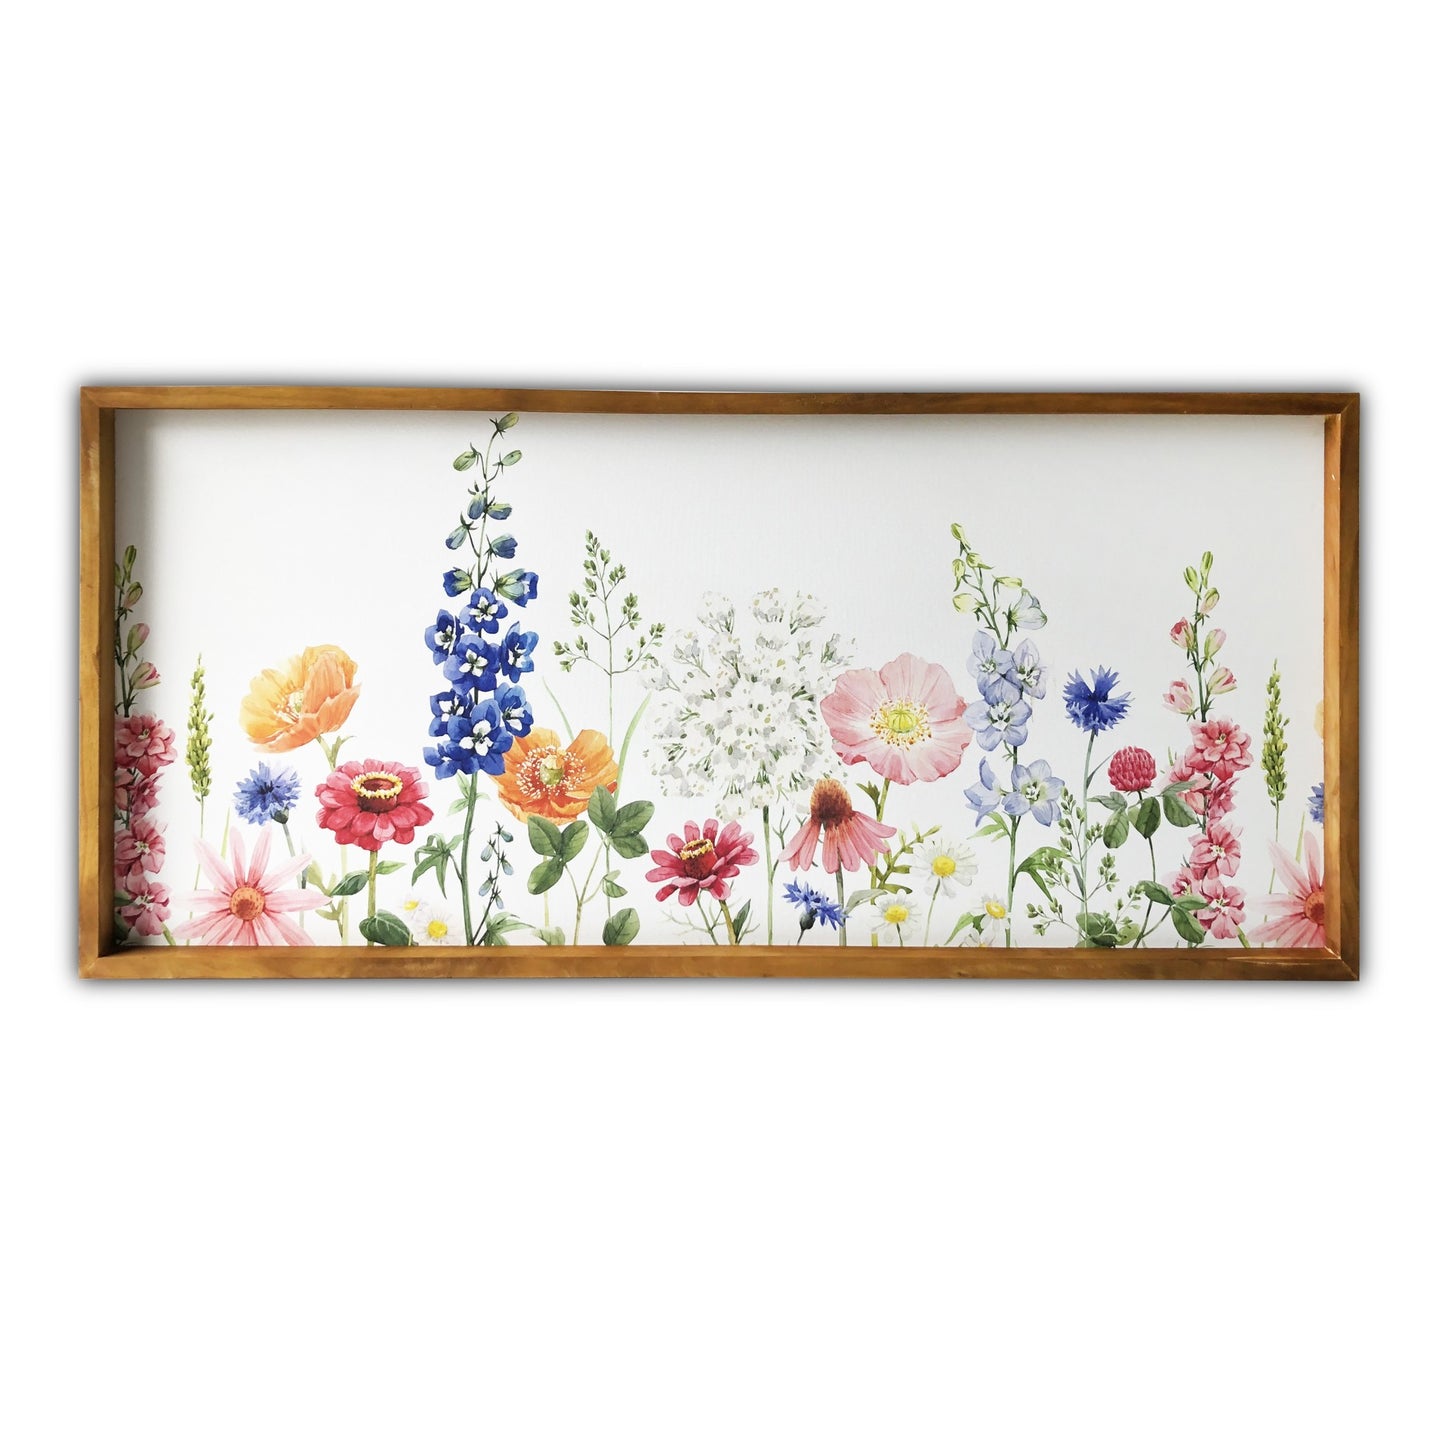 Vivid Spring Garden Wooden Framed Canvas Wall Art Picture Frame Graphic Art Wall Art